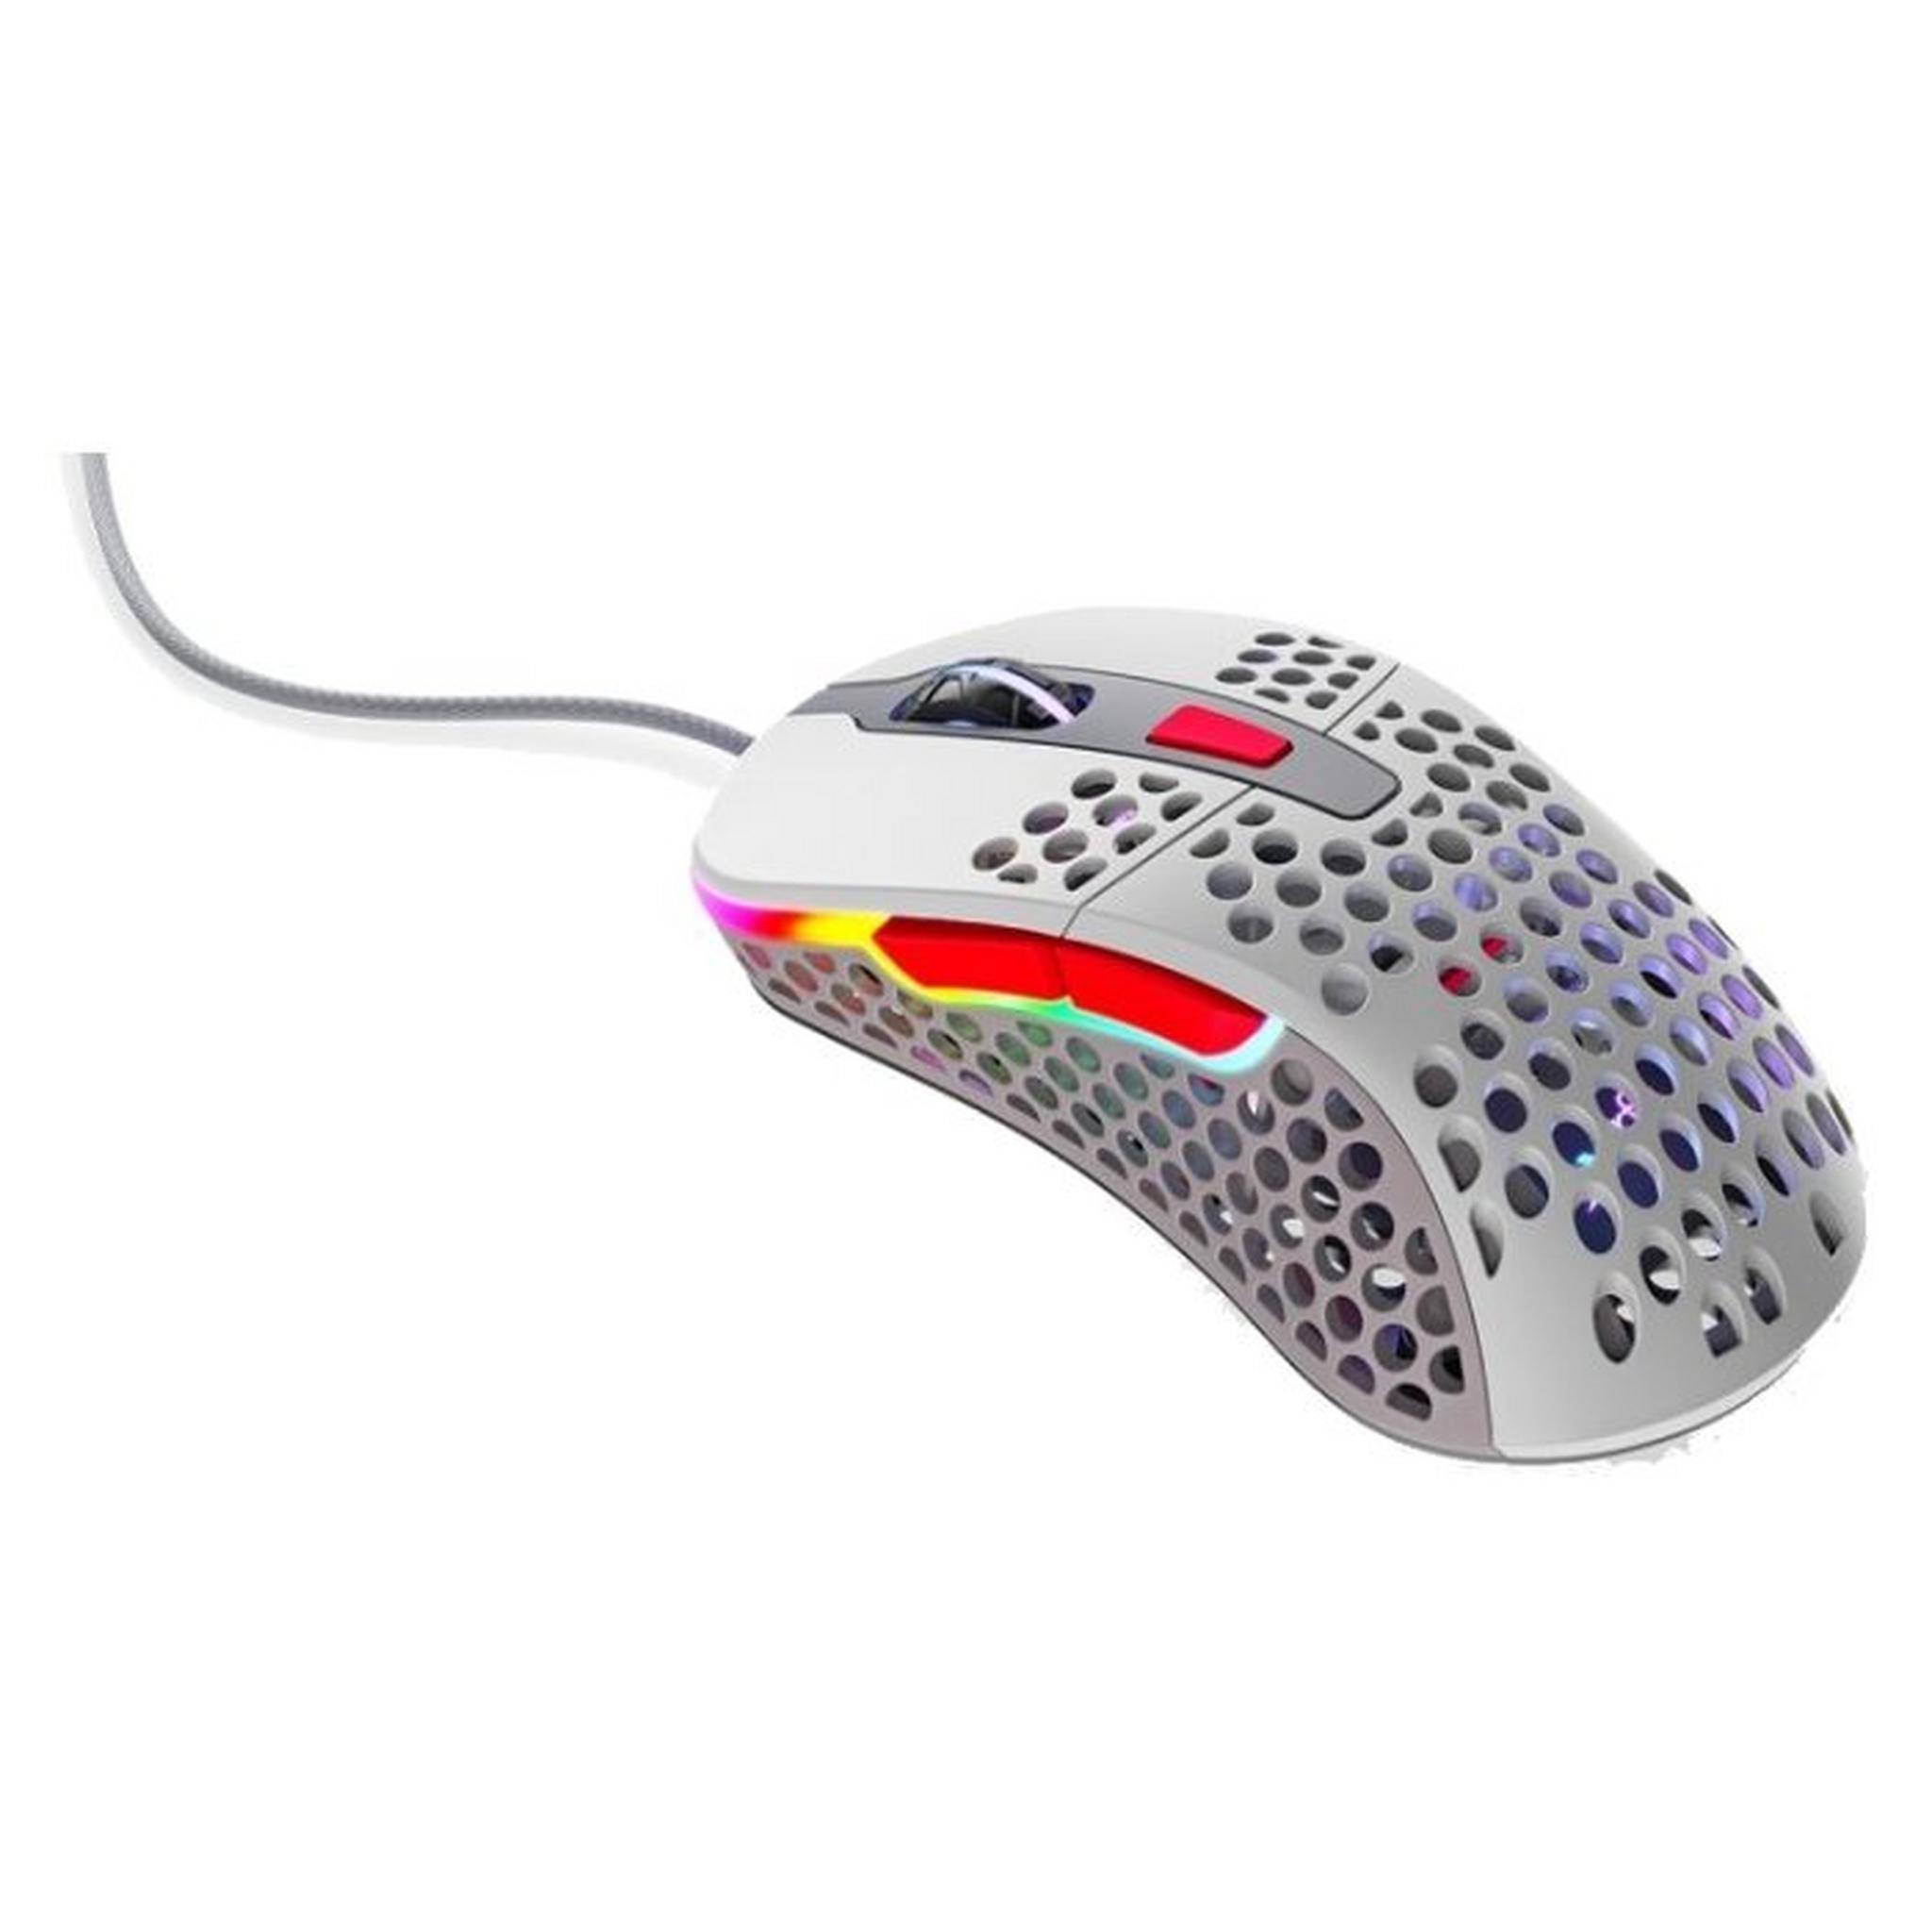 Xtrfy M4 RGB Wired Mouse - Retro